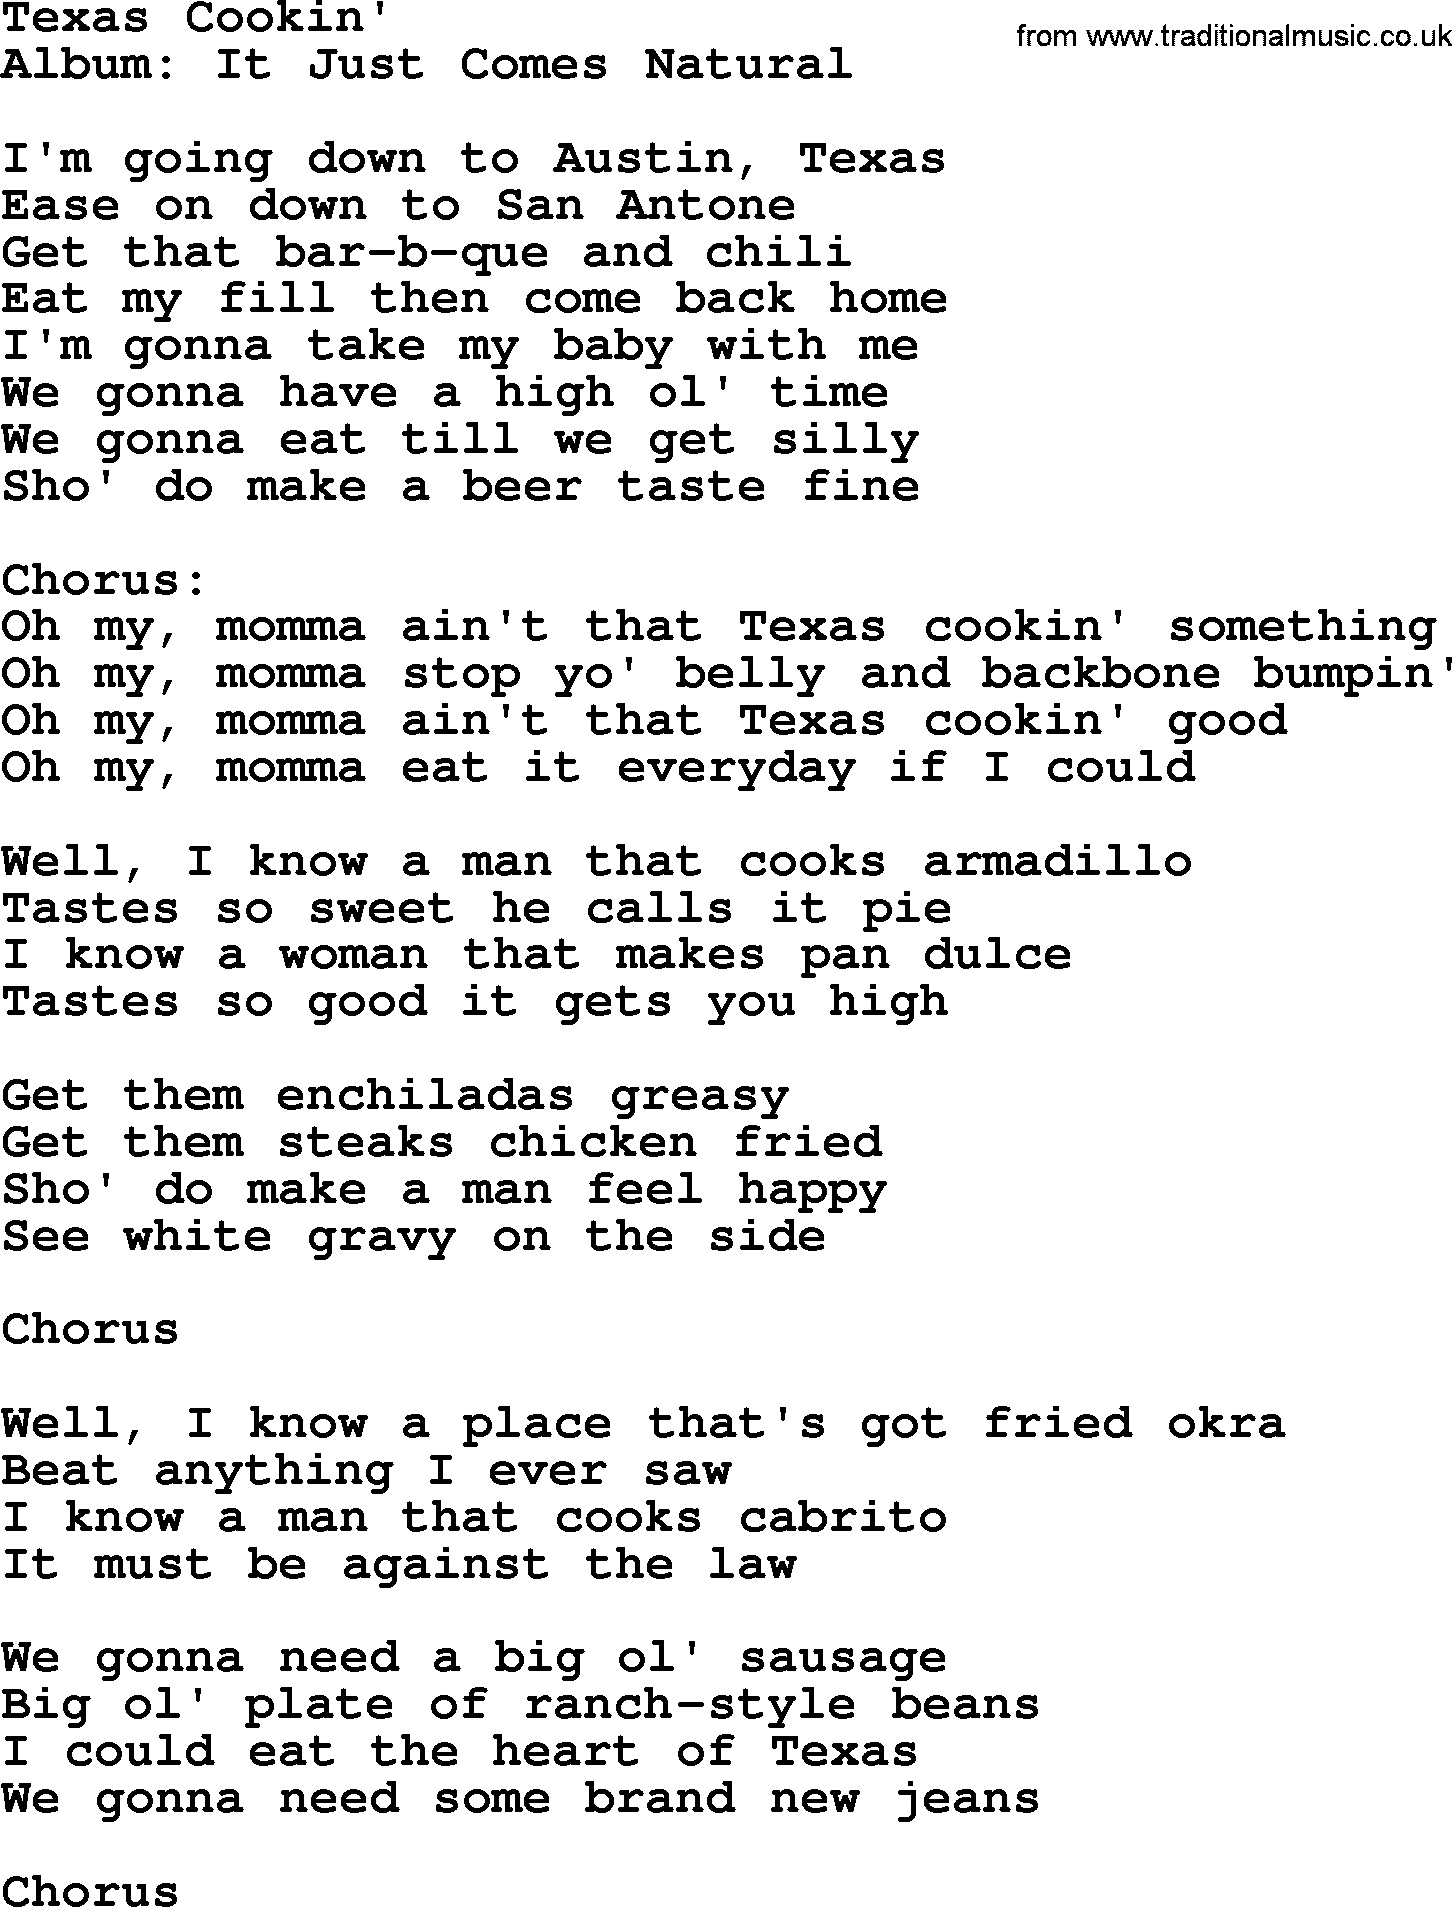 George Strait song: Texas Cookin', lyrics